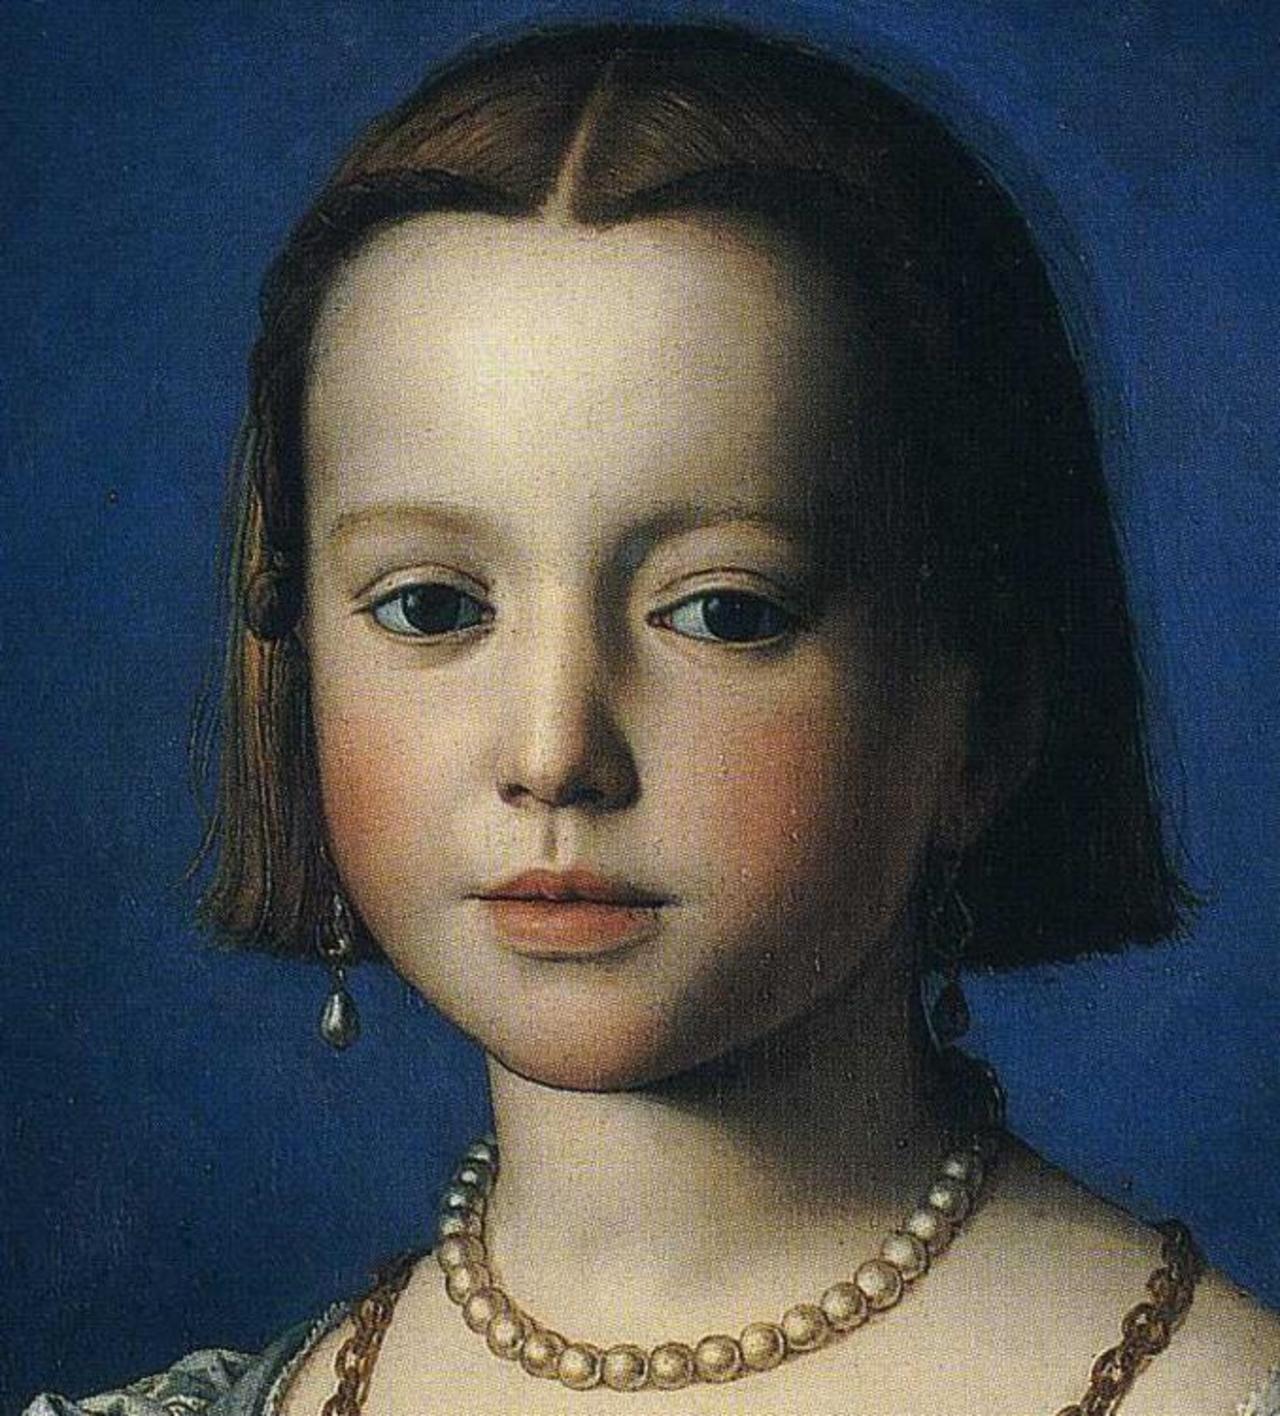 RT @Desailaur: Agnolo Bronzino- Portrait of Bia de'Medici. (Detail) #art https://t.co/EW9oK8g13F